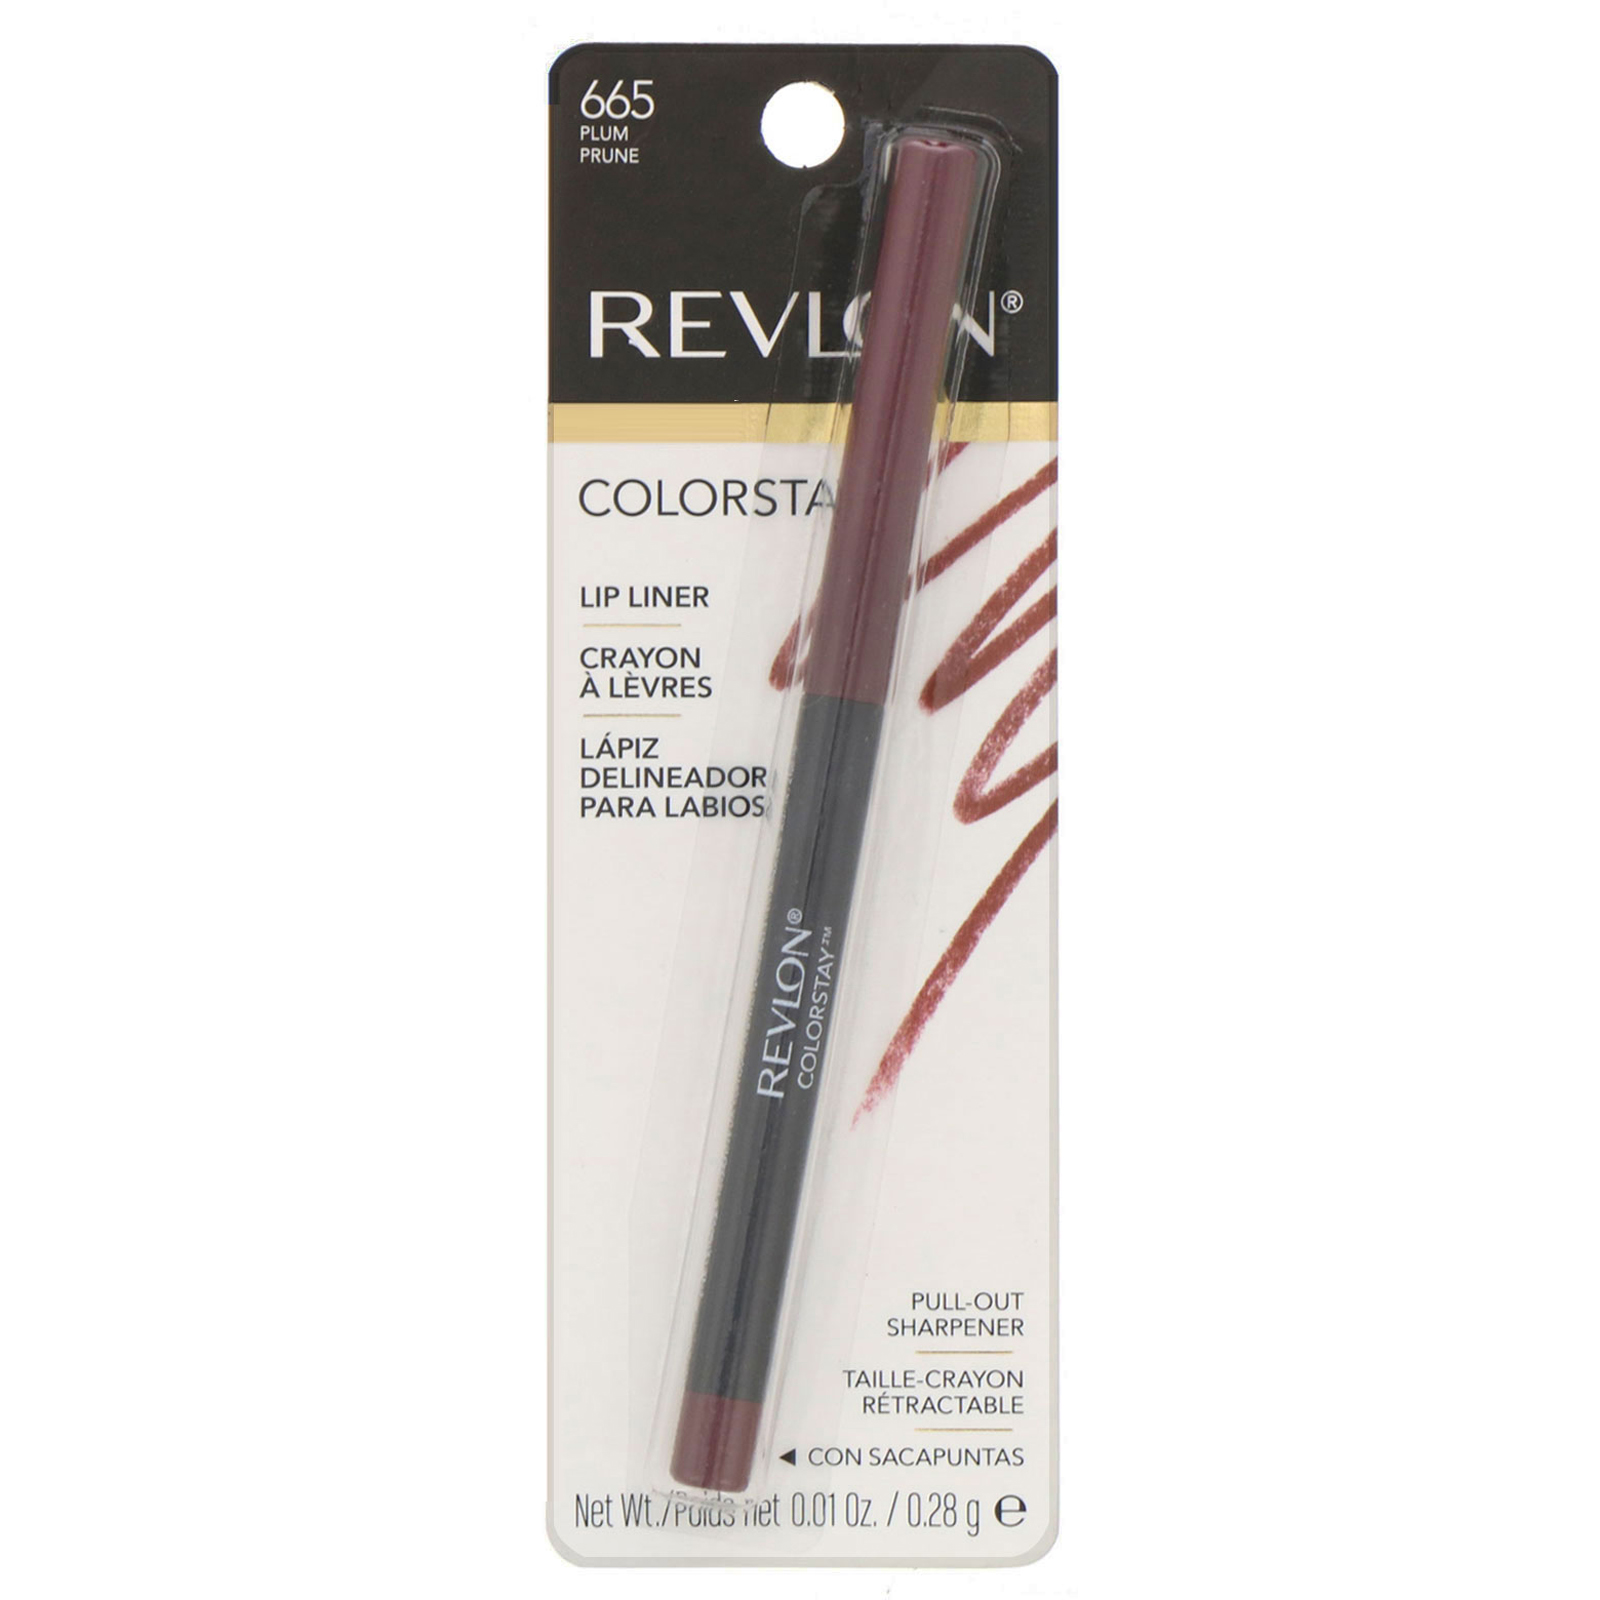 Revlon, Colorstay, Lip Liner, Plum 665, 0.01 oz (0.28 g) - iHerb